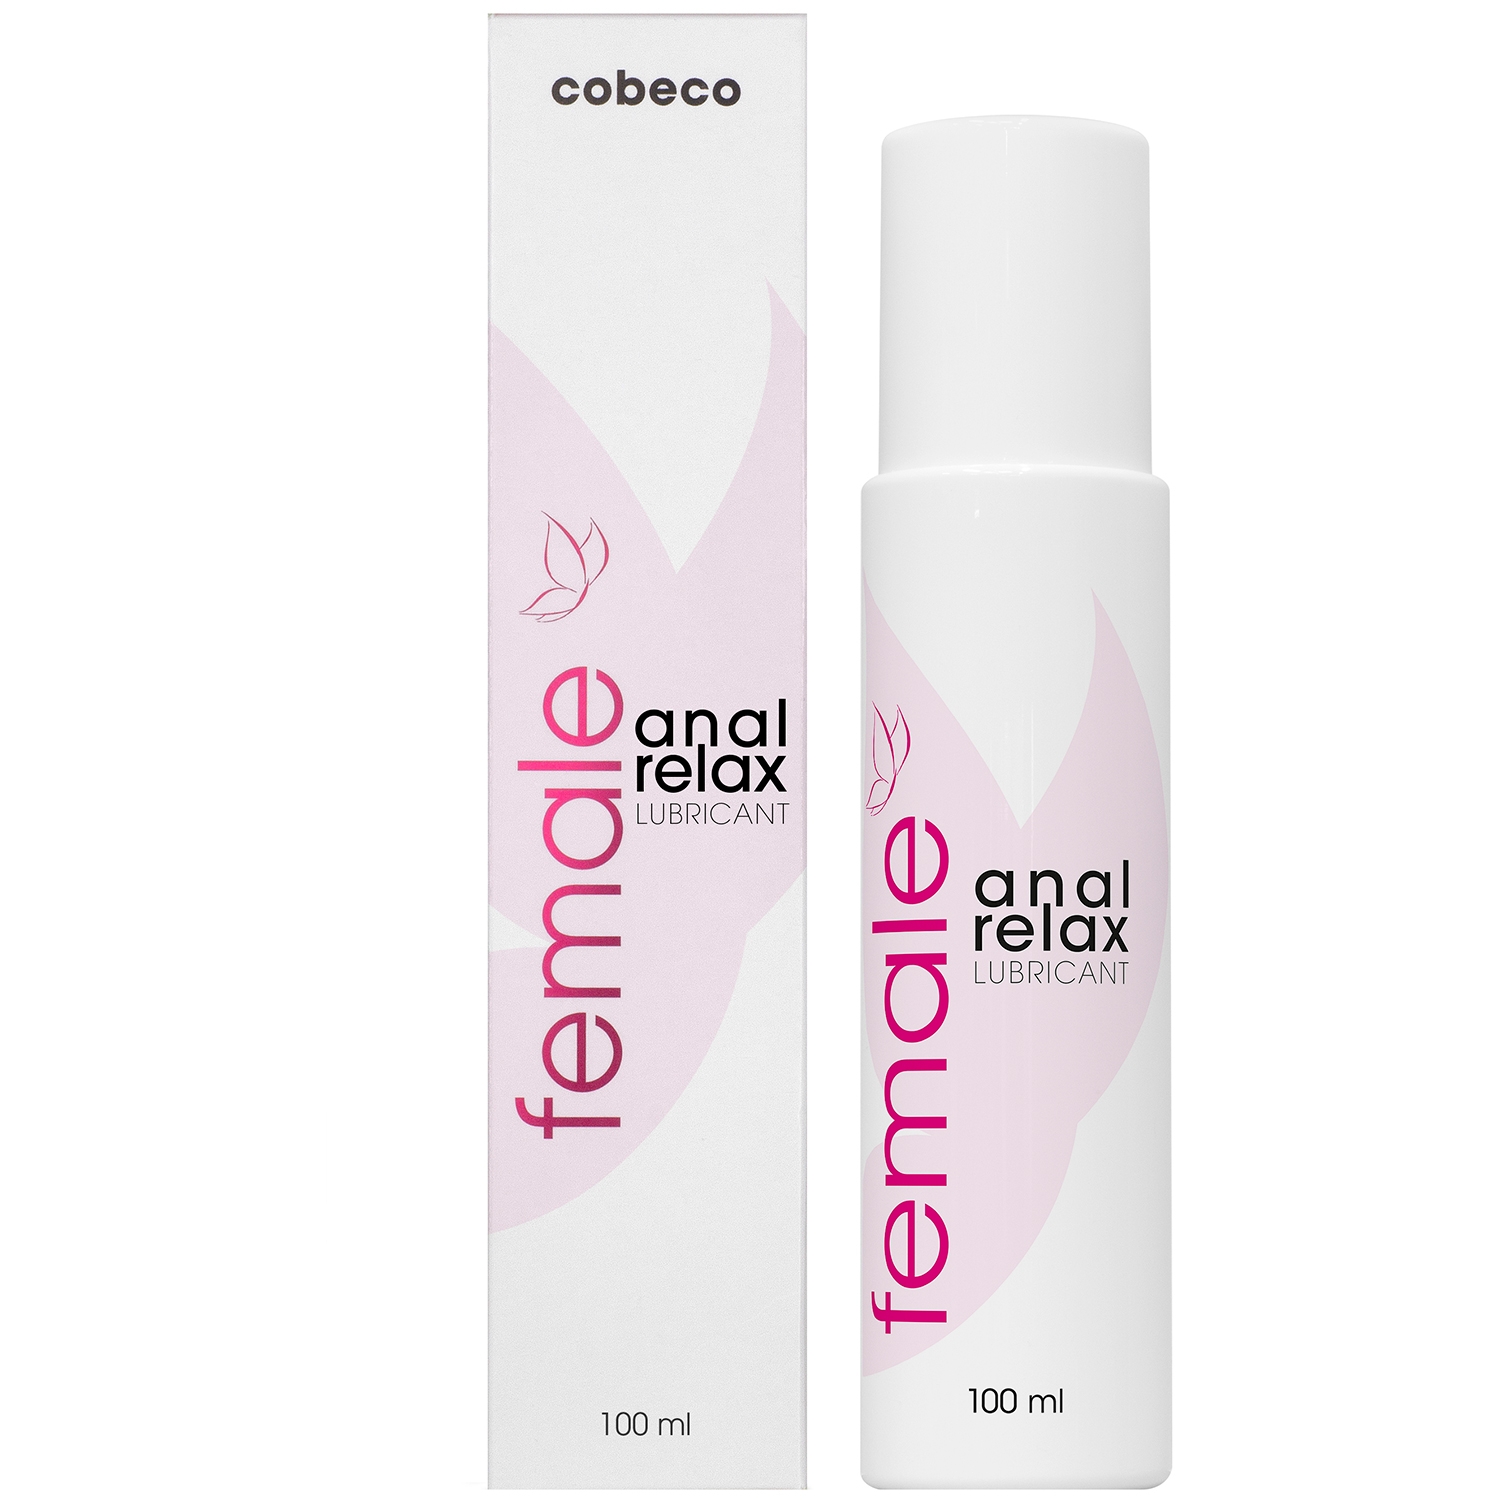 Cobeco Female Anal Relax Glidecreme 100ml - Klar